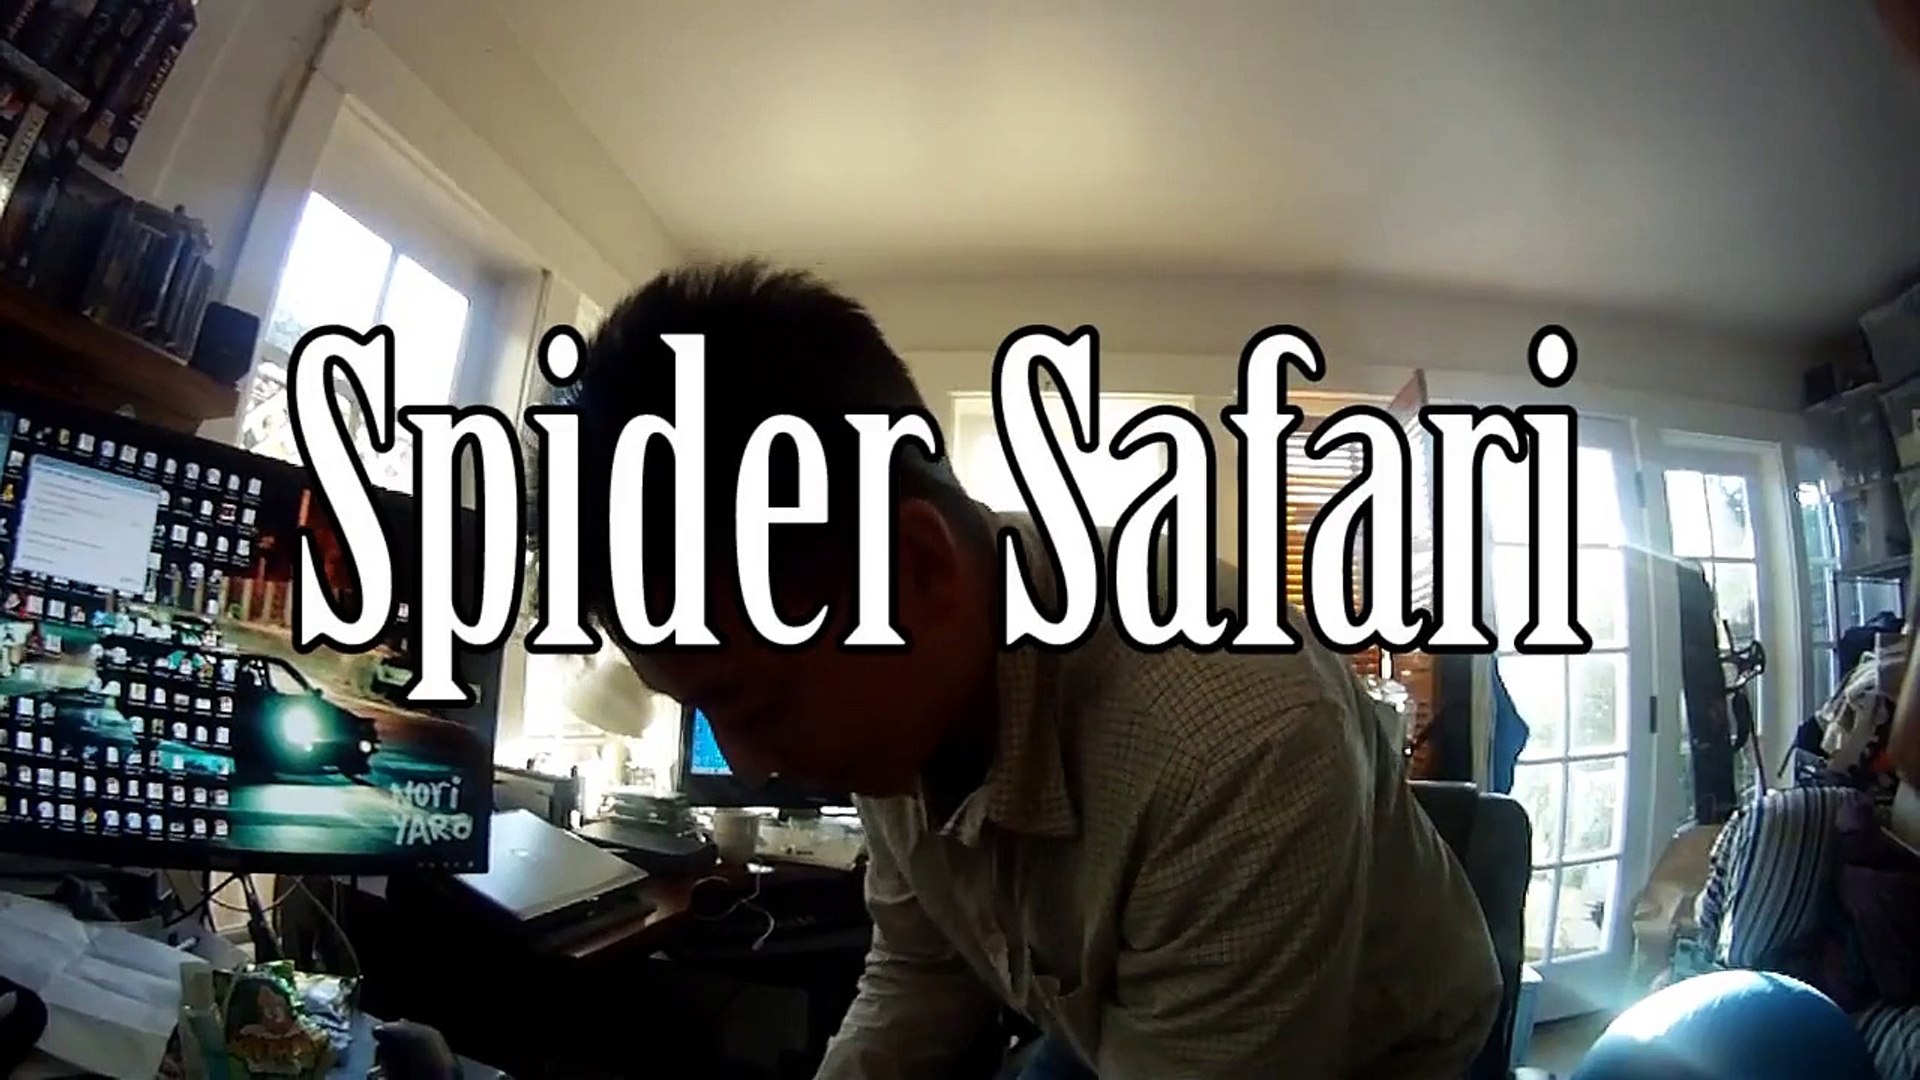 Spider Safari (Golden Orb Spider Infestation)